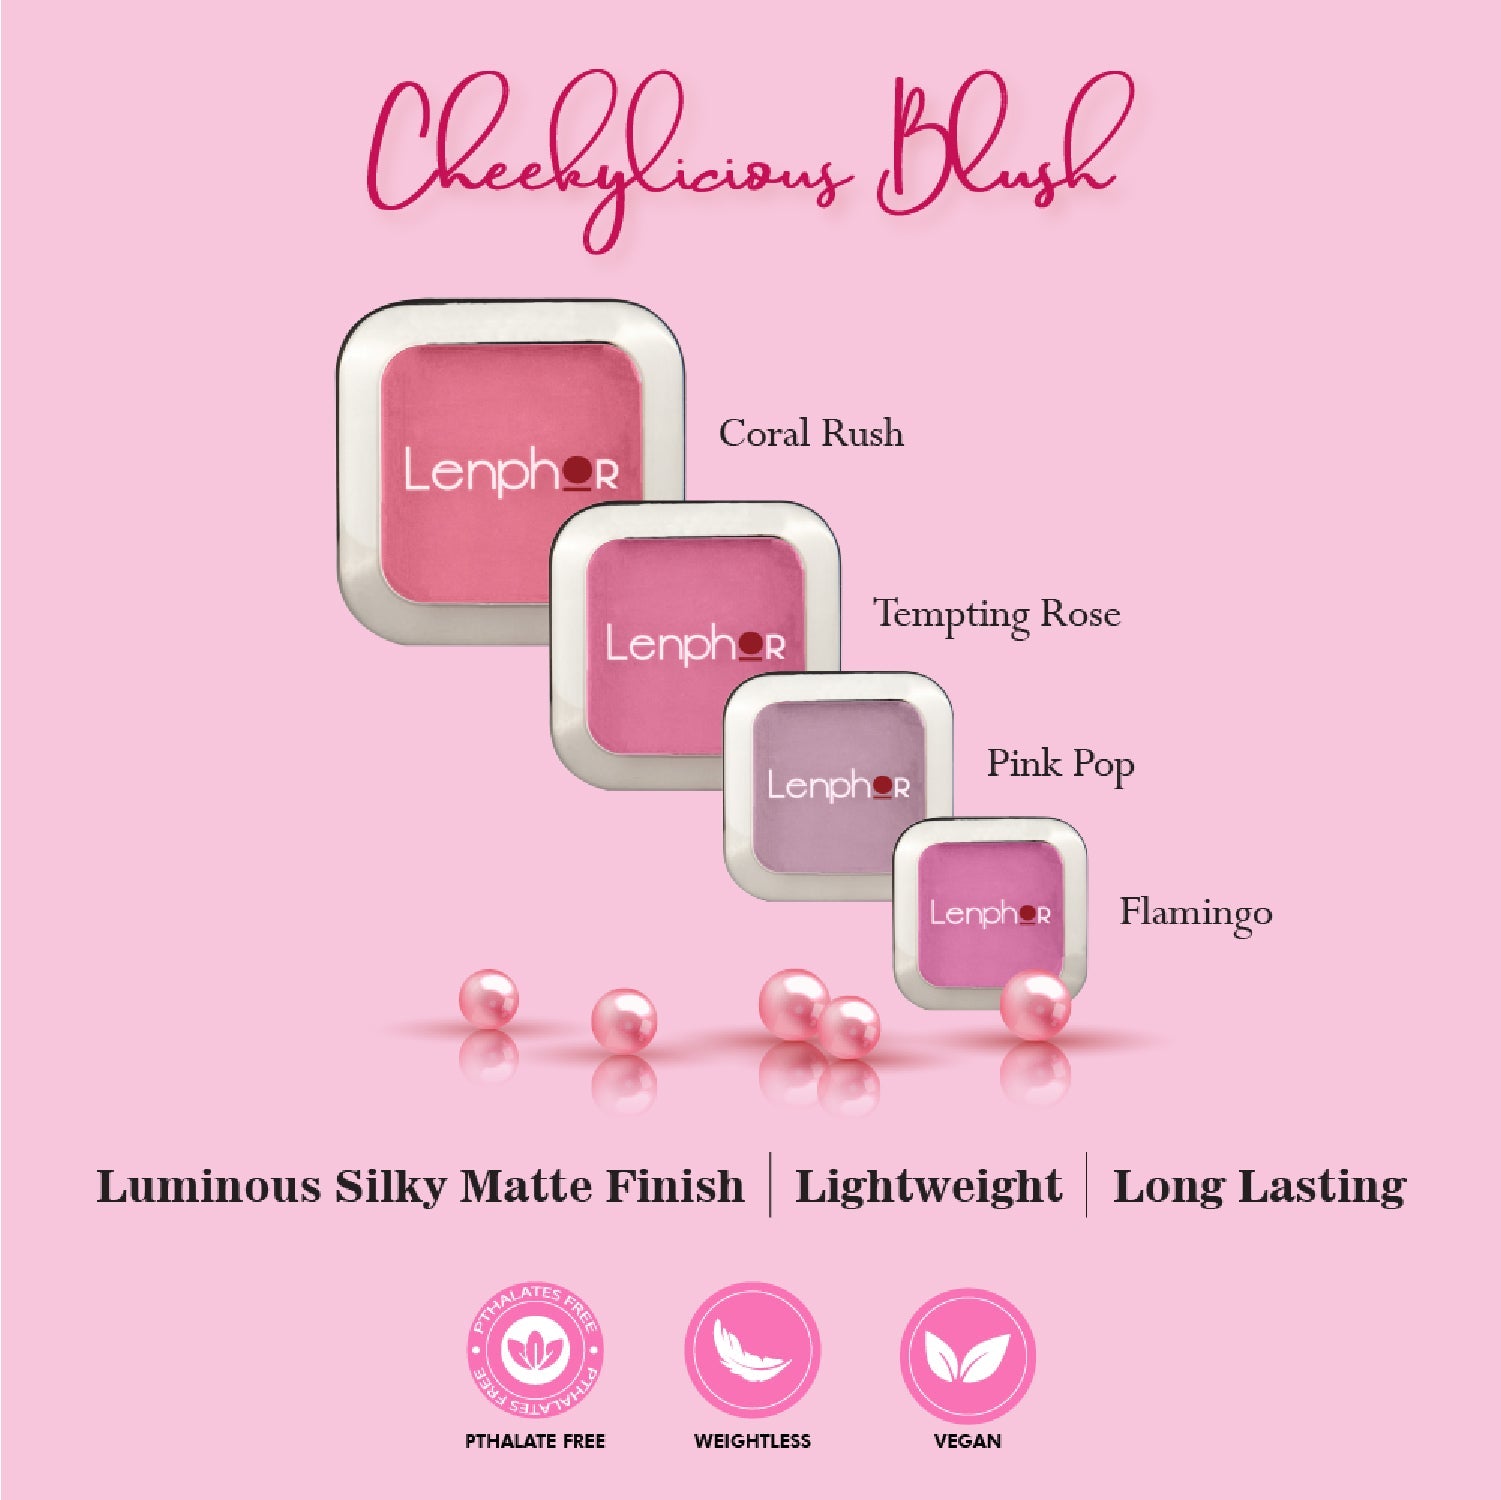 Cheekylicious Powder Blush Pink Pop - Lenphor